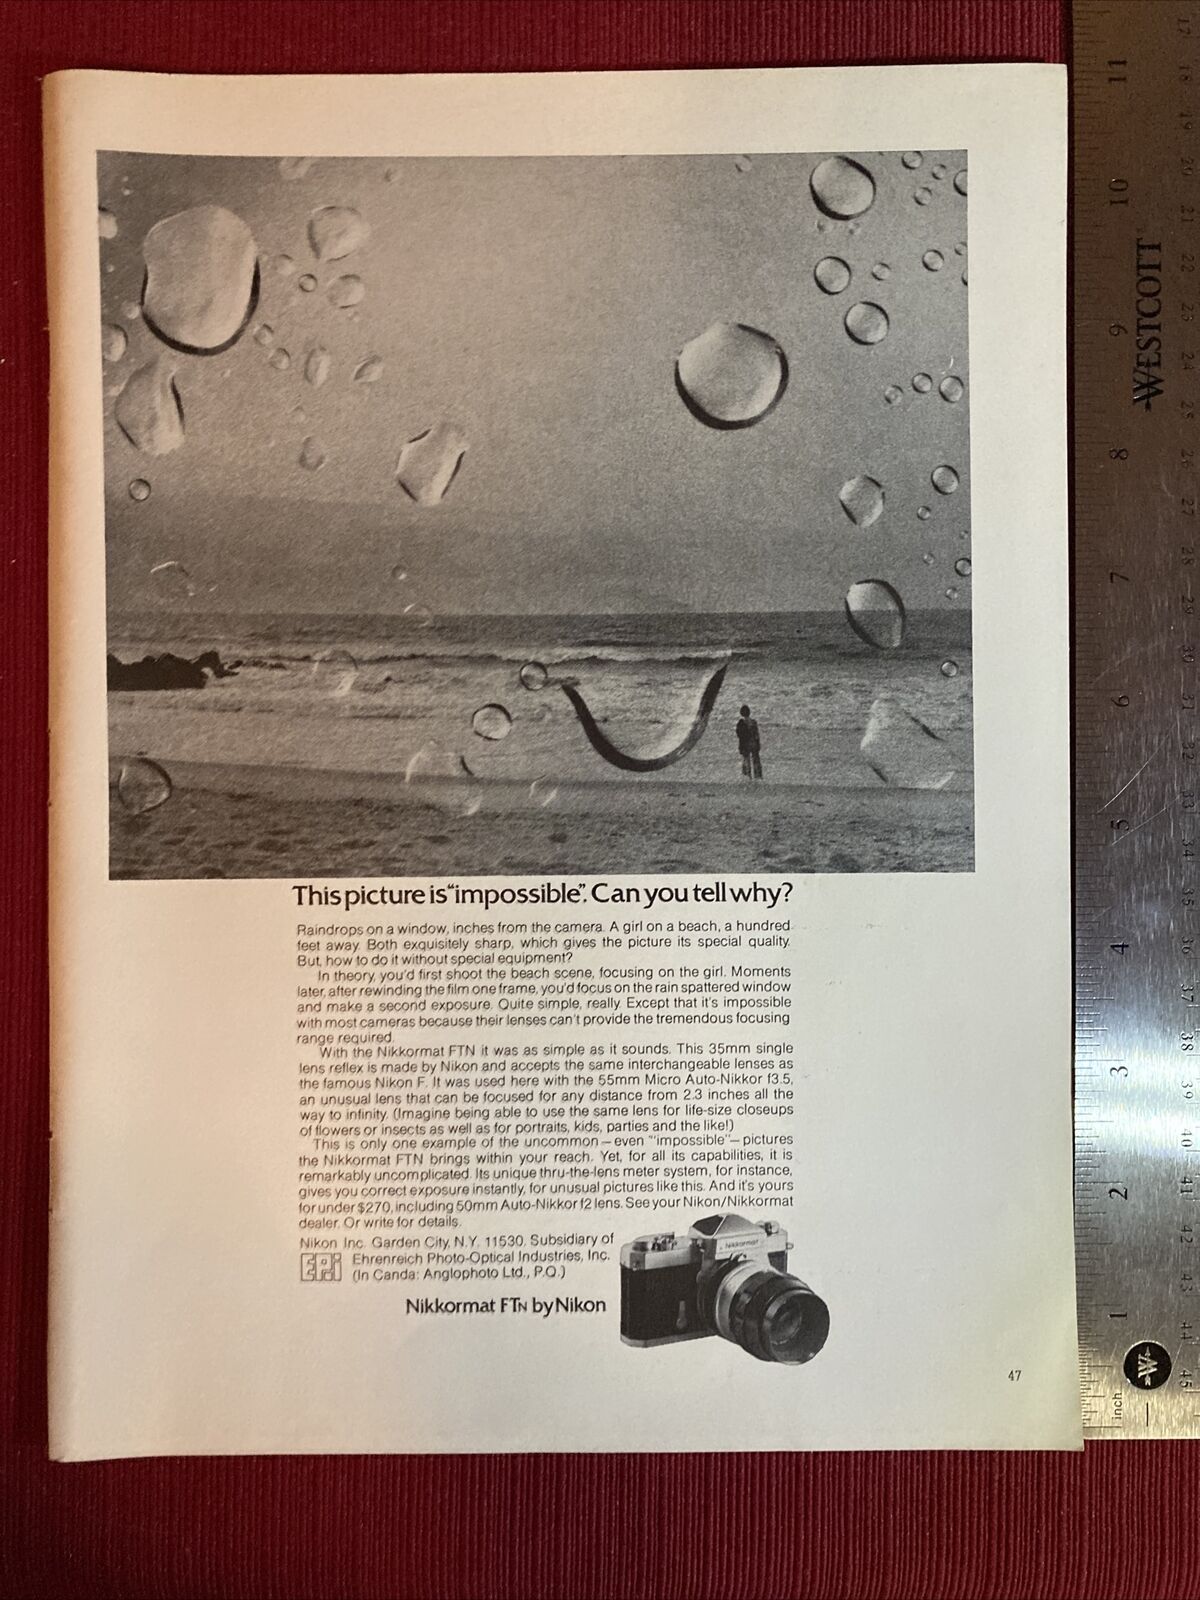 Nikkormat FTn Camera by Nikon 1969 Print Ad - Great To Frame